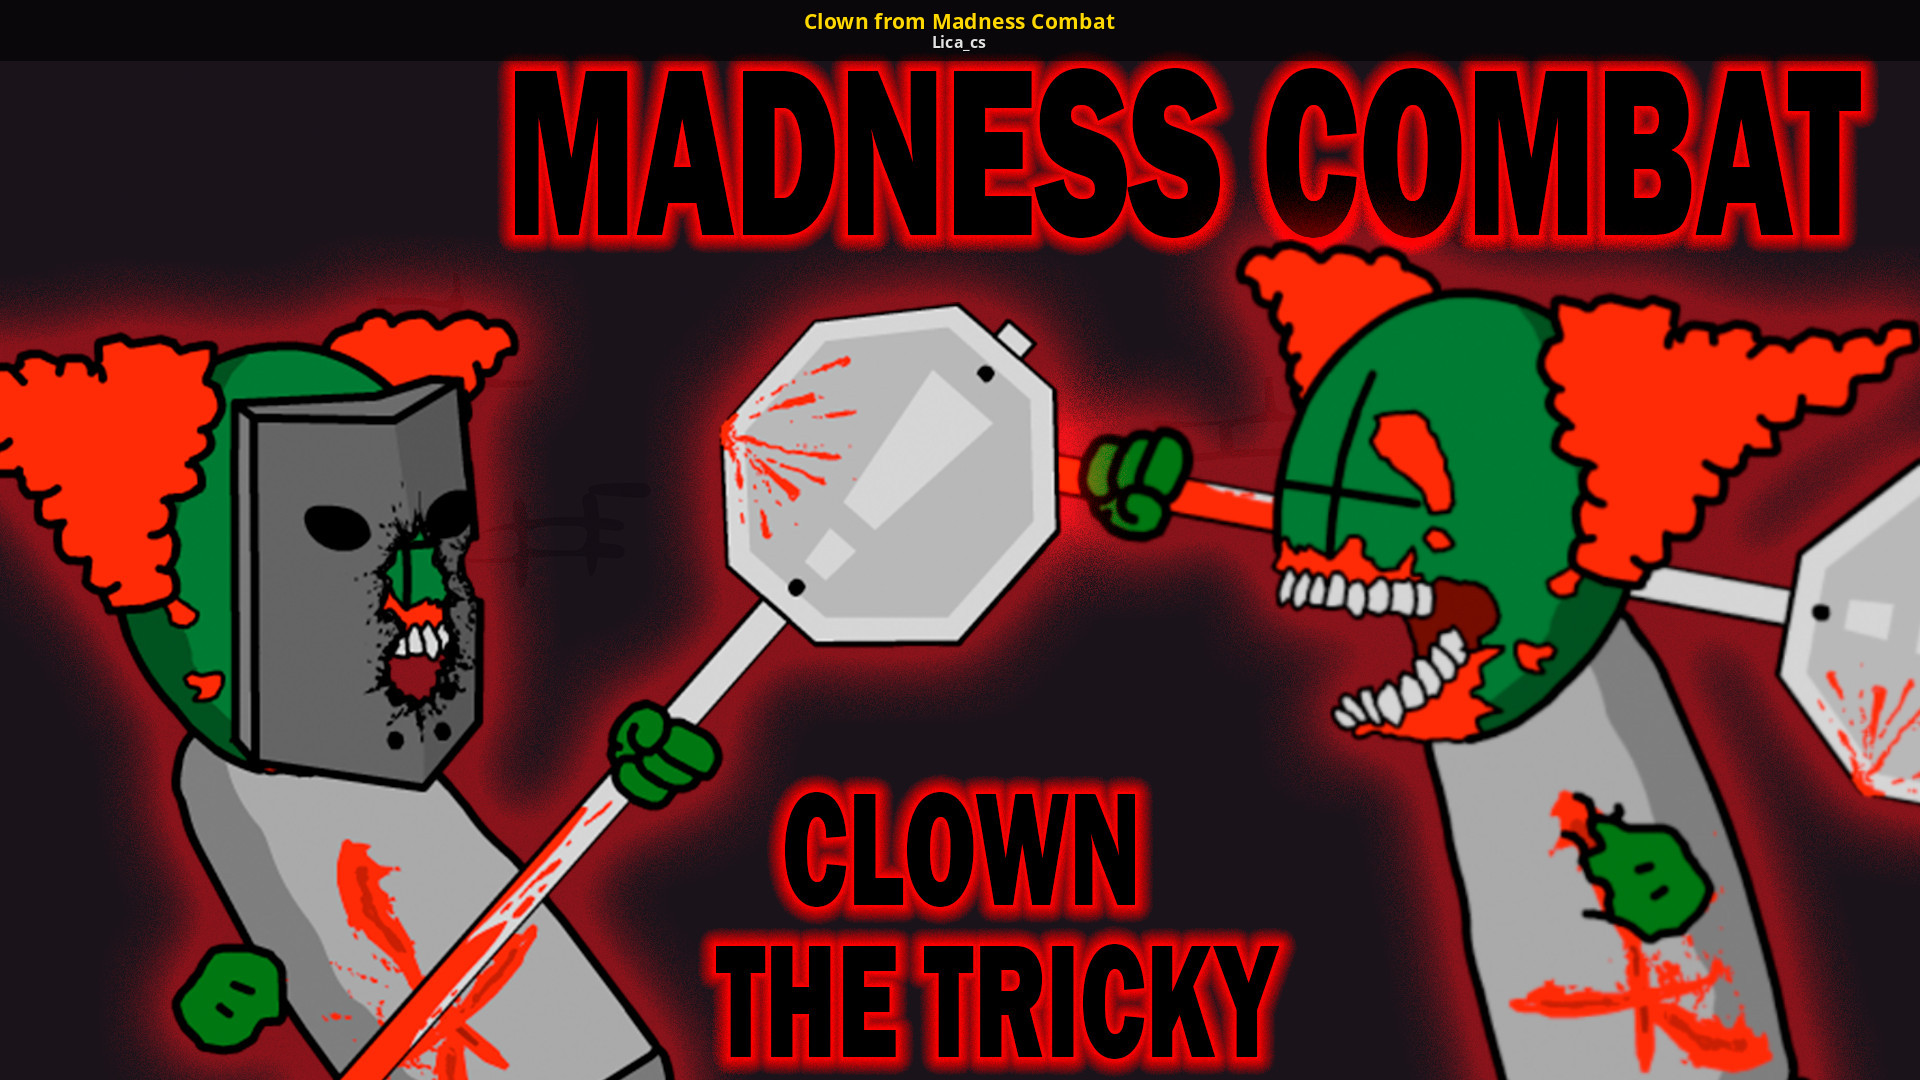 Madness combat tricky : r/madnesscombat